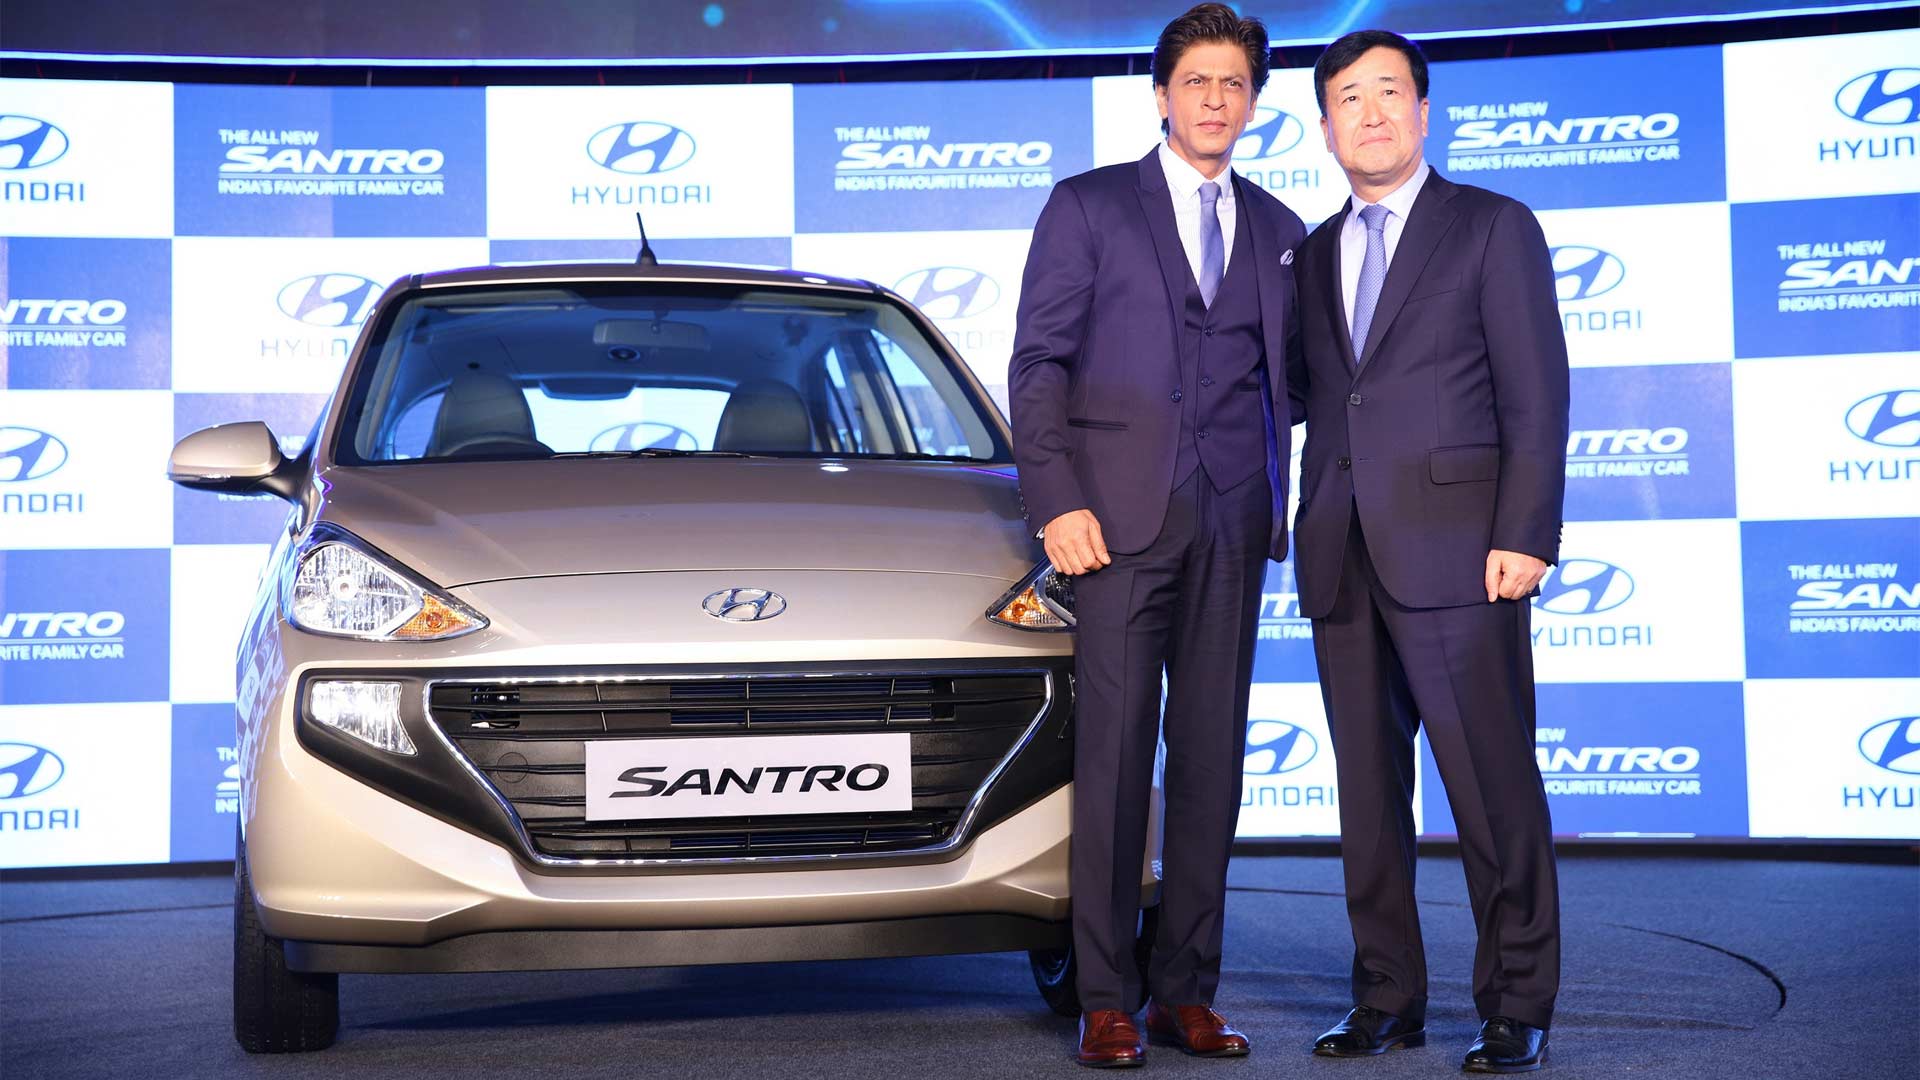 2019-2nd-generation-Hyundai-Santro-India-launch